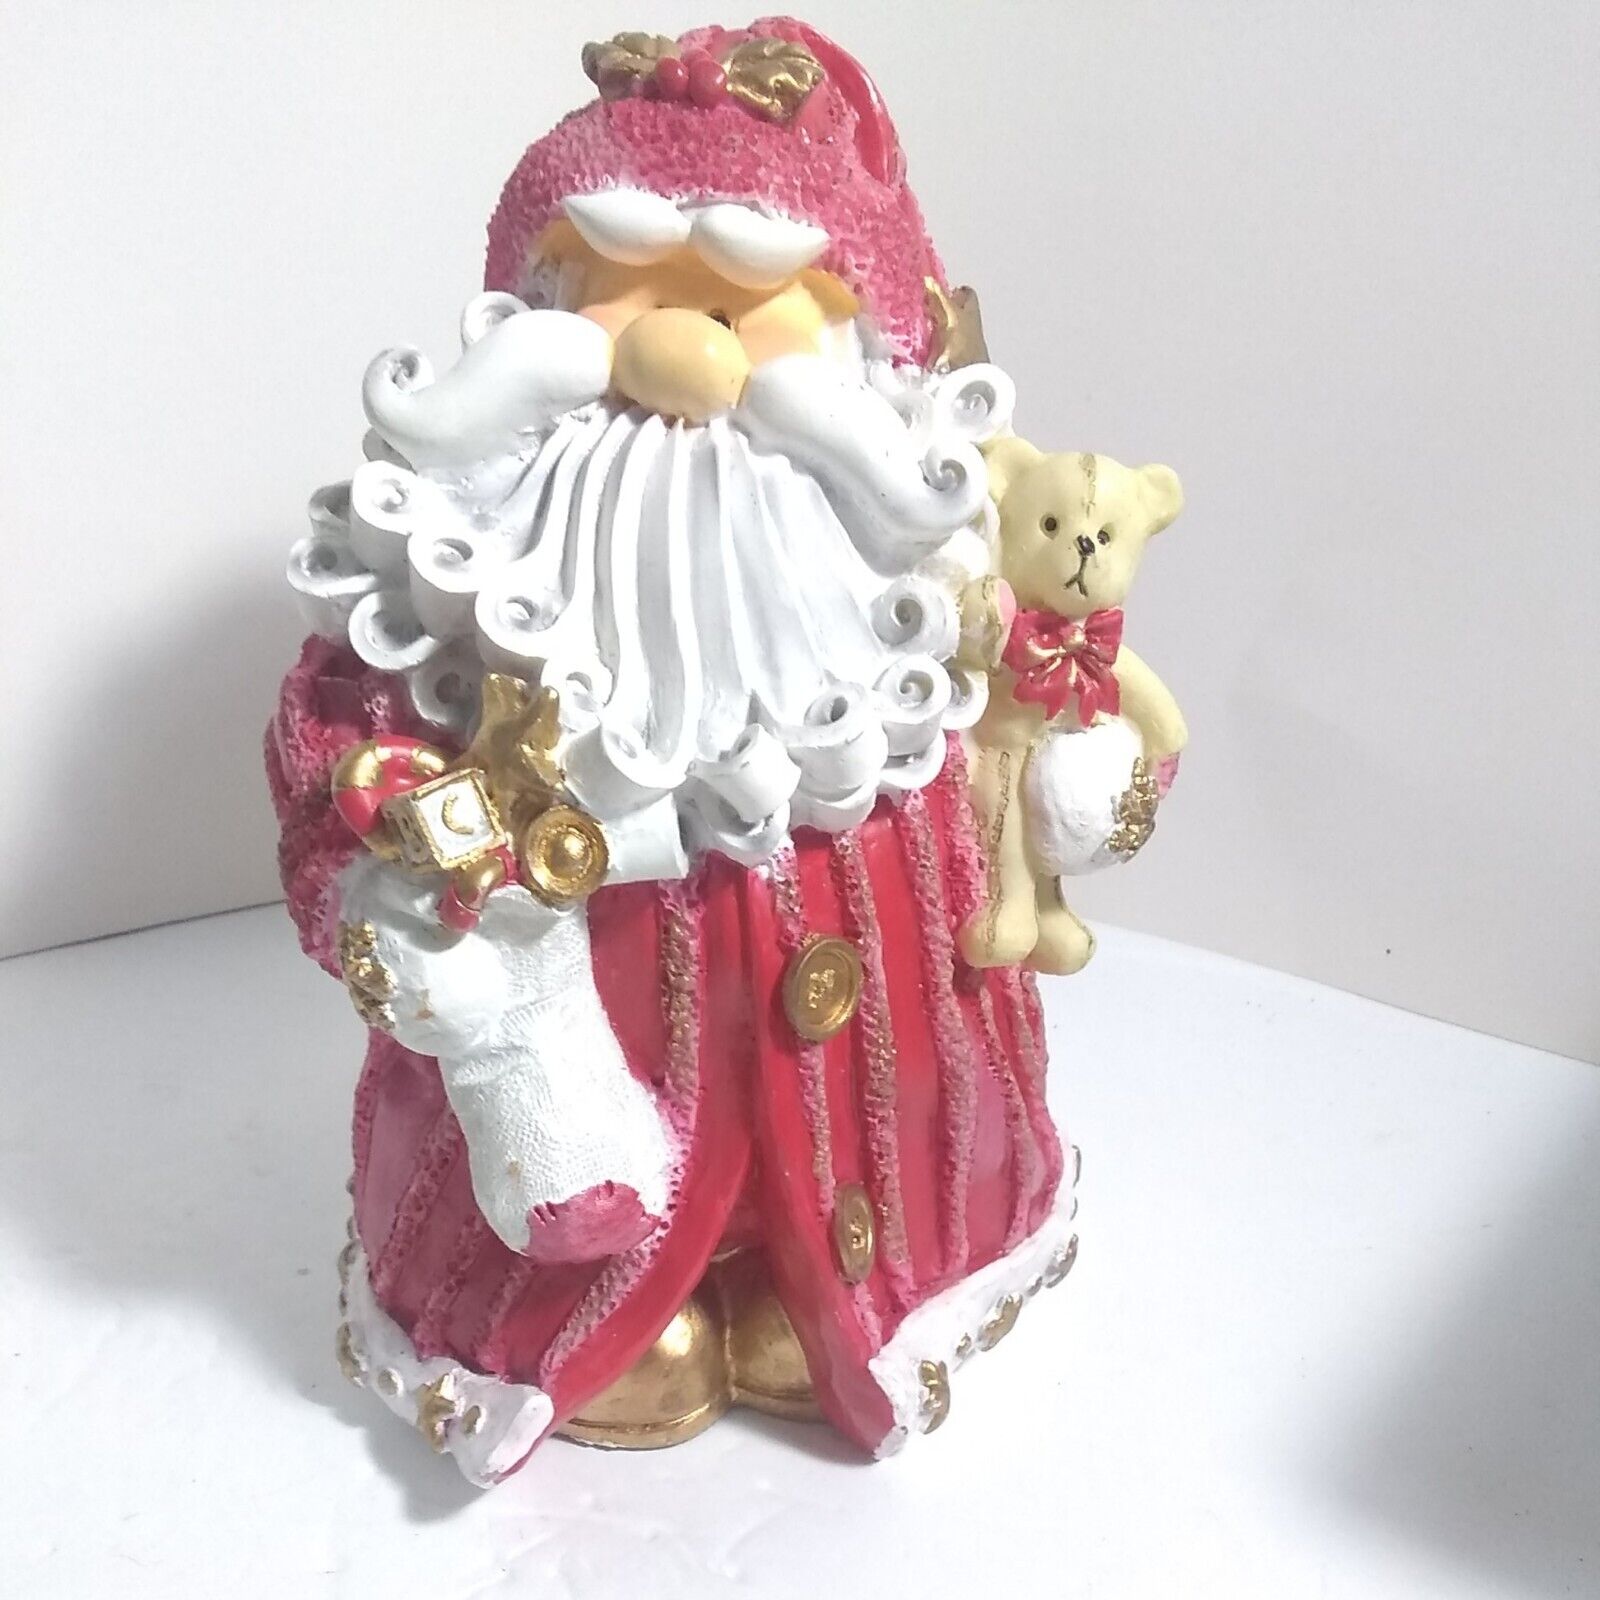 Snowman Santa Figure Teddy and Presents 9 inch Vintage